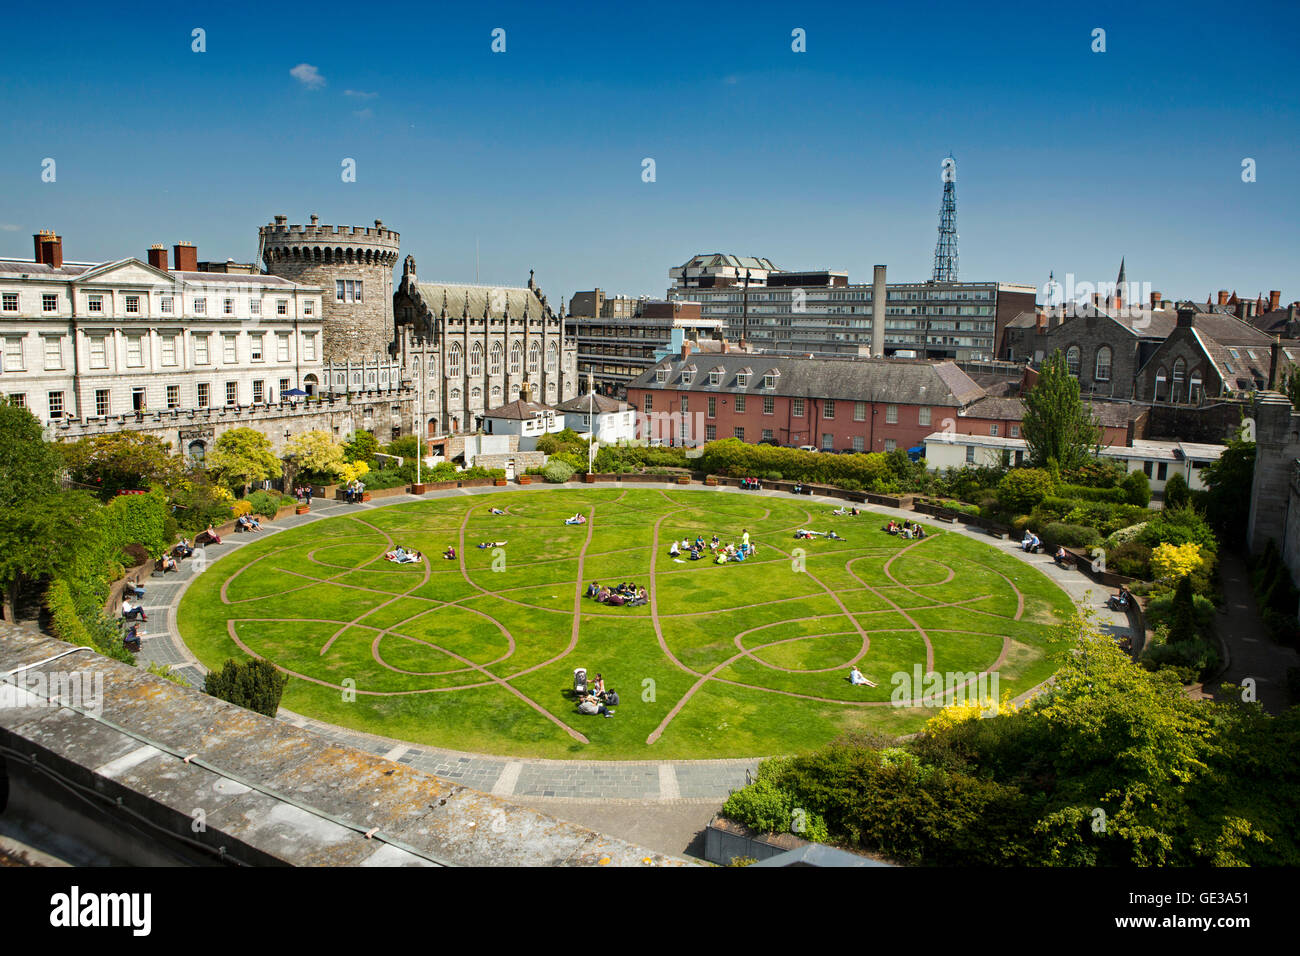 Irland, Dublin, Dublin Castle, erhöhten Blick auf Dubhlinn Gärten von Chester Beatty Library Roof Garden Stockfoto